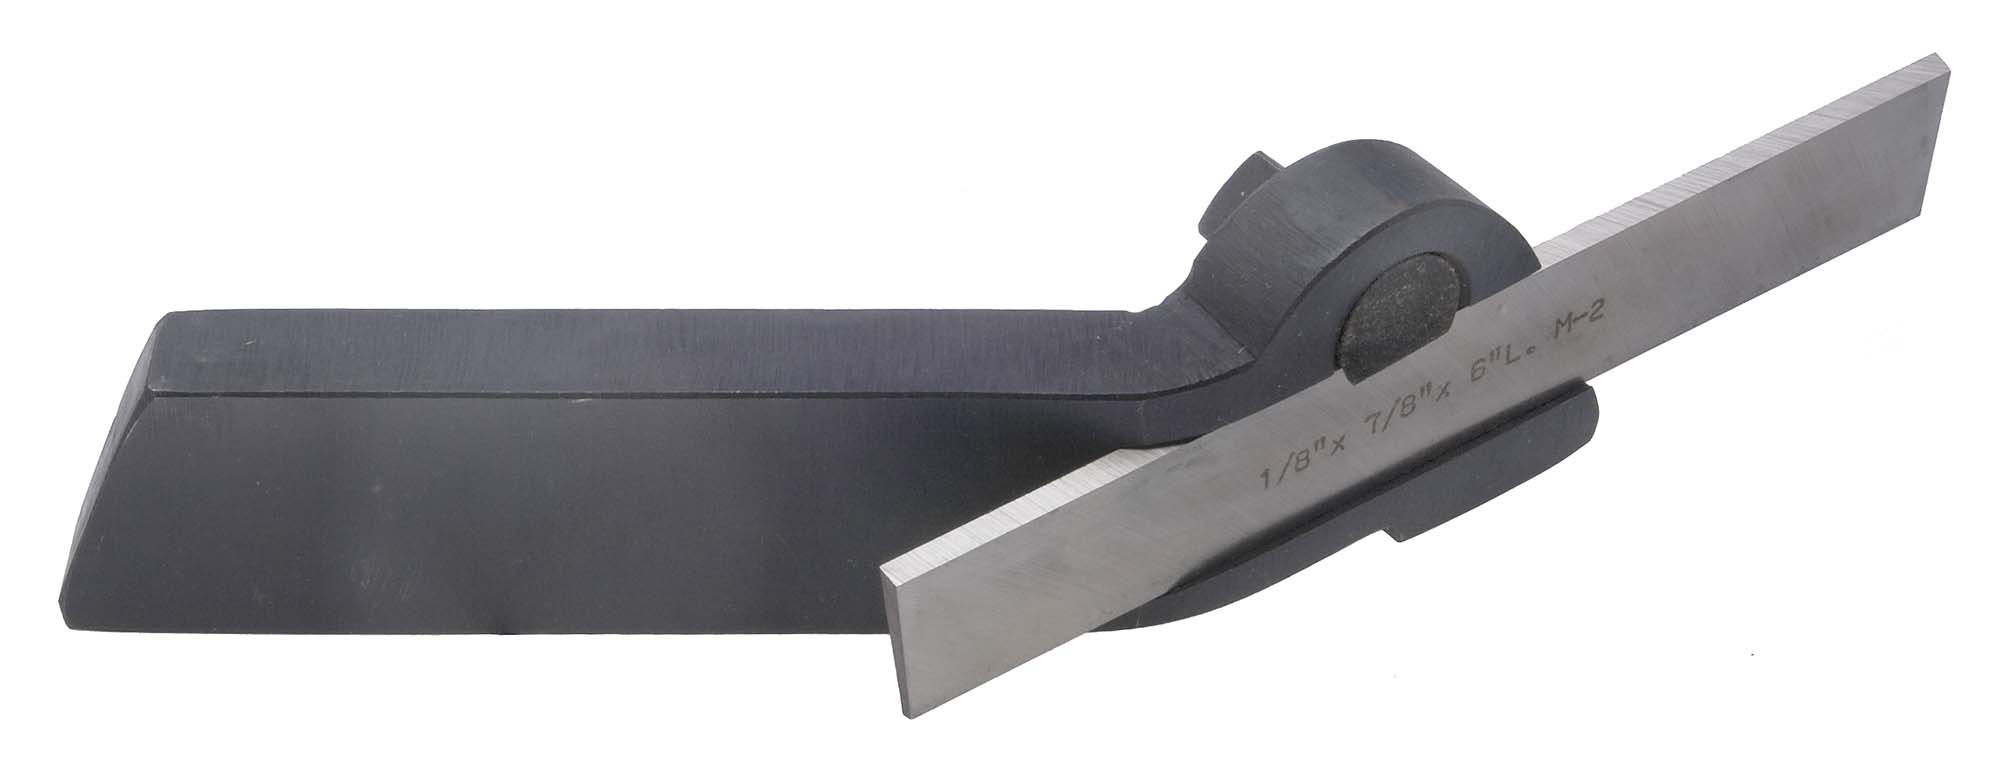 1 X 2" Shank Left Hand Lathe Cutoff Tool Holder, holds 1/4 x 1-1/4" Blades